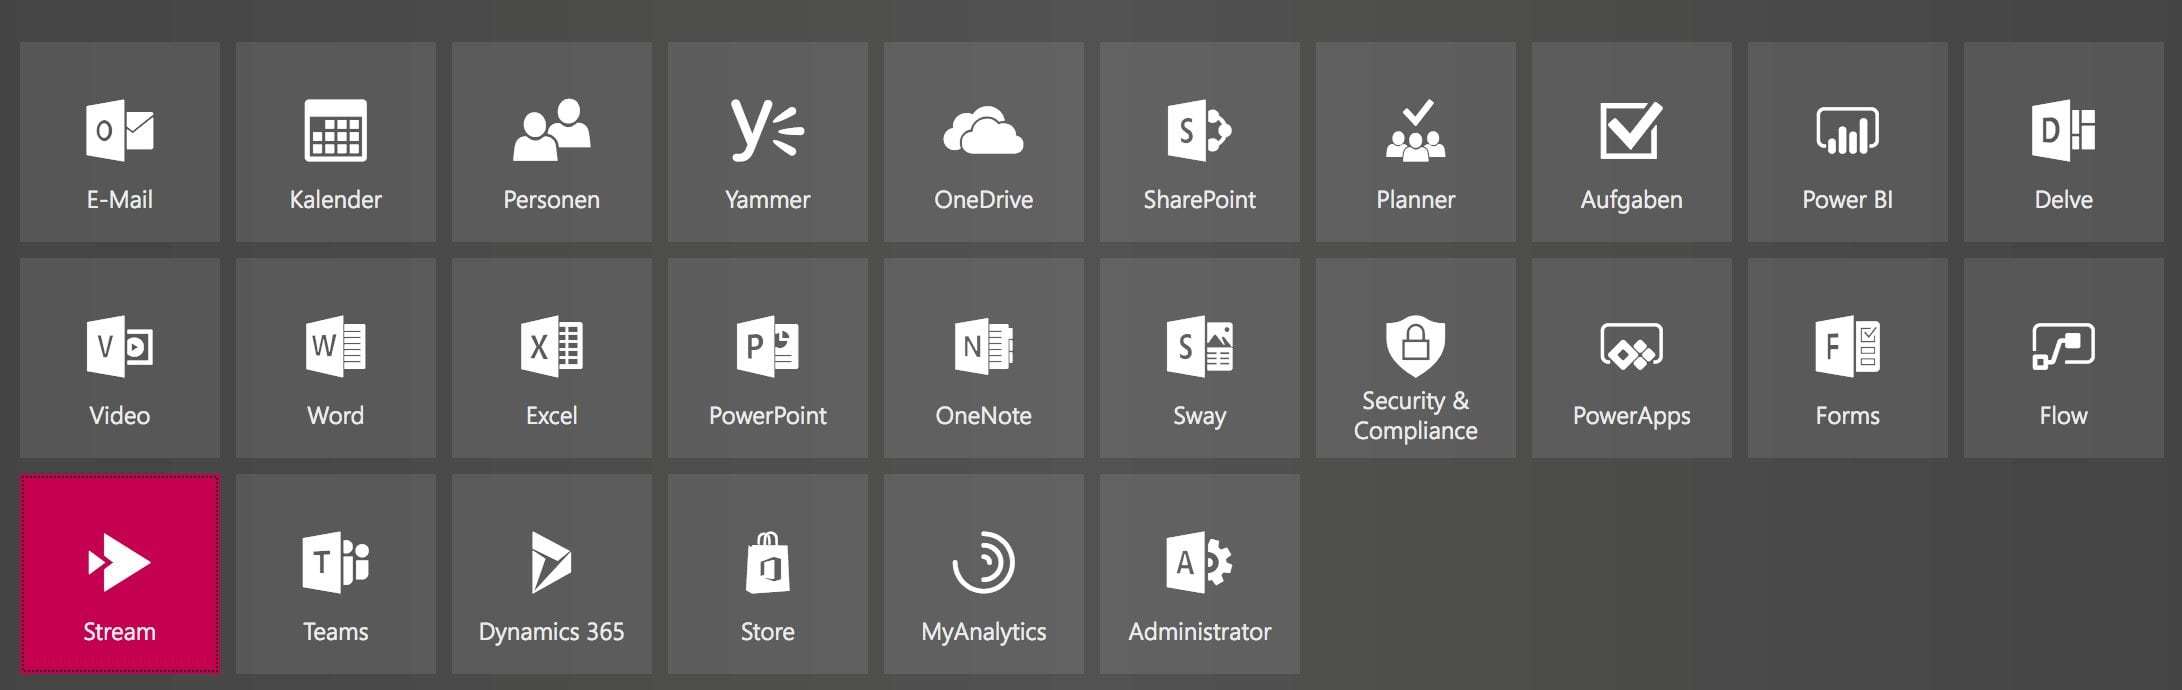 Microsoft Steam App Darstellung im Office 365 Portal